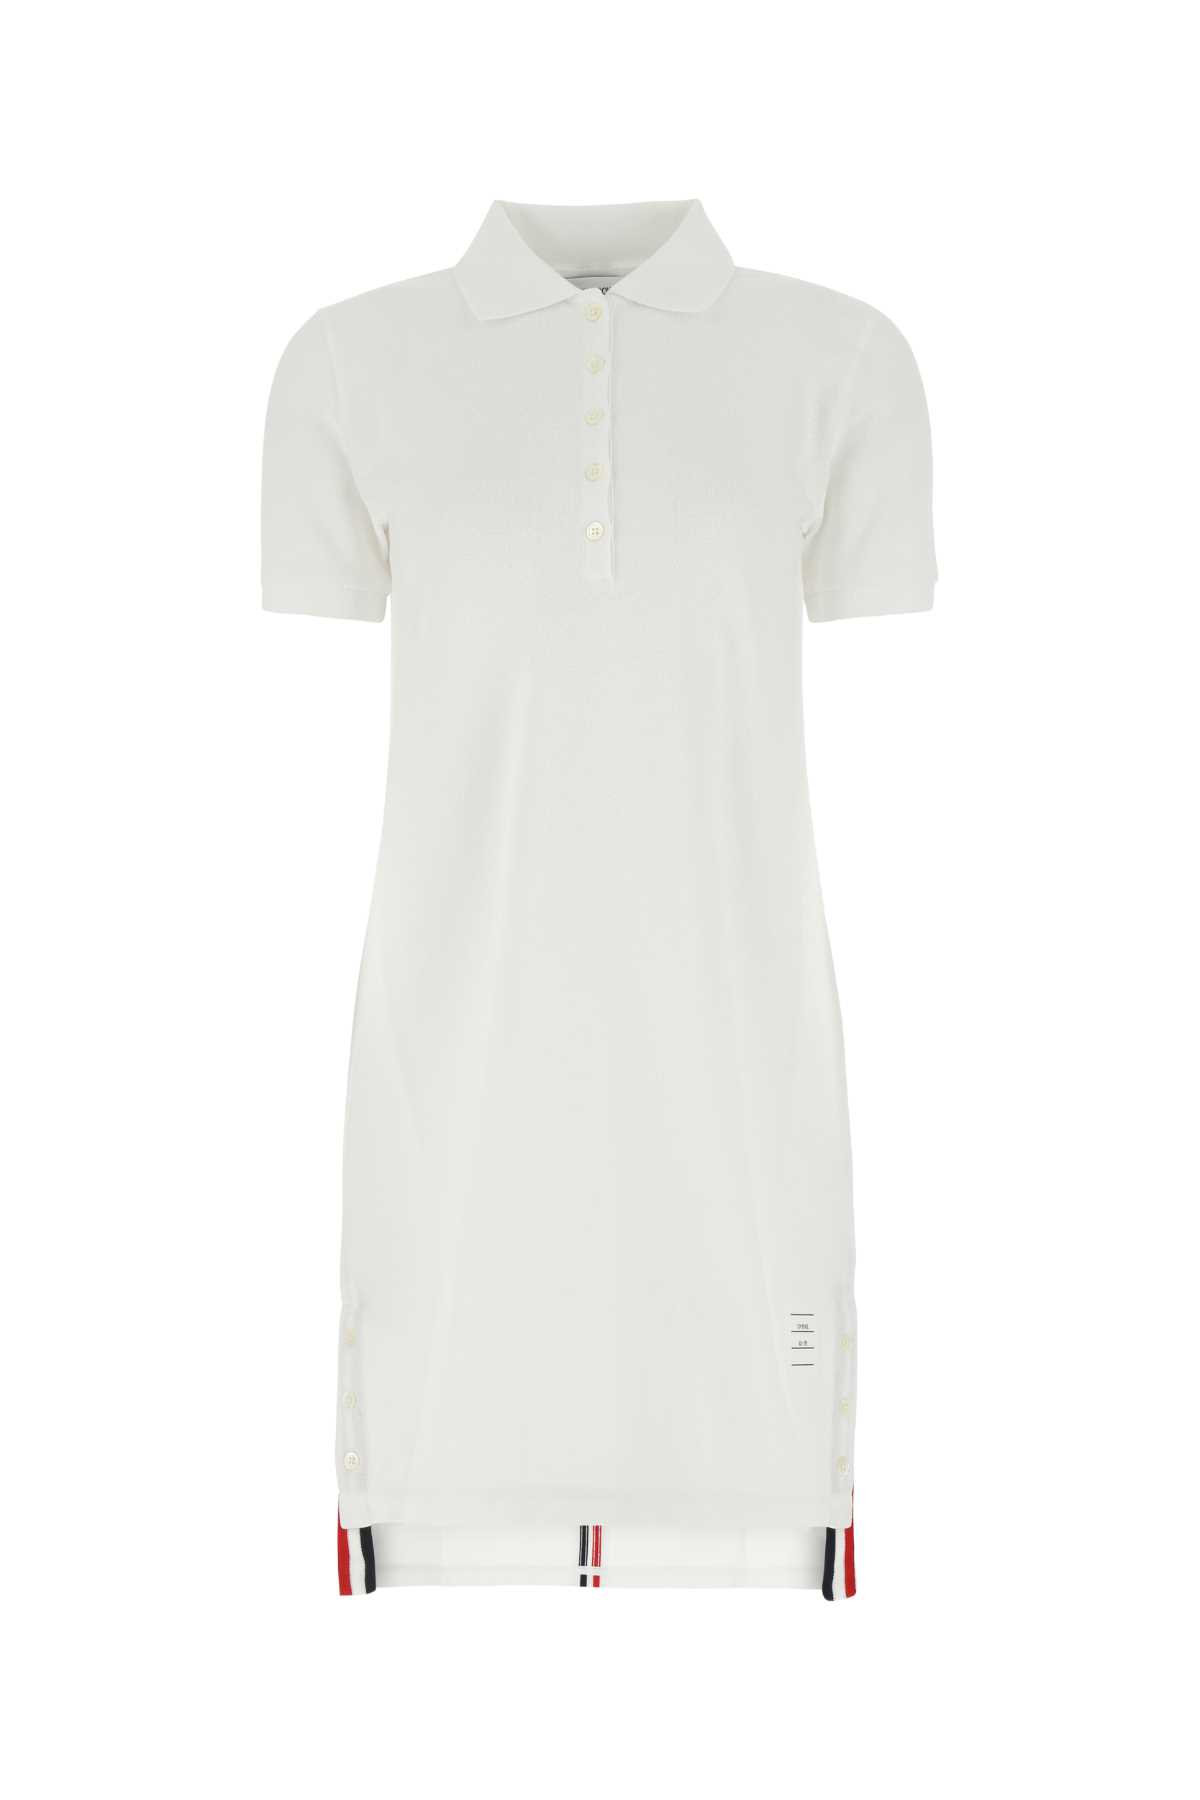 White Piquet Polo Shirt Dress